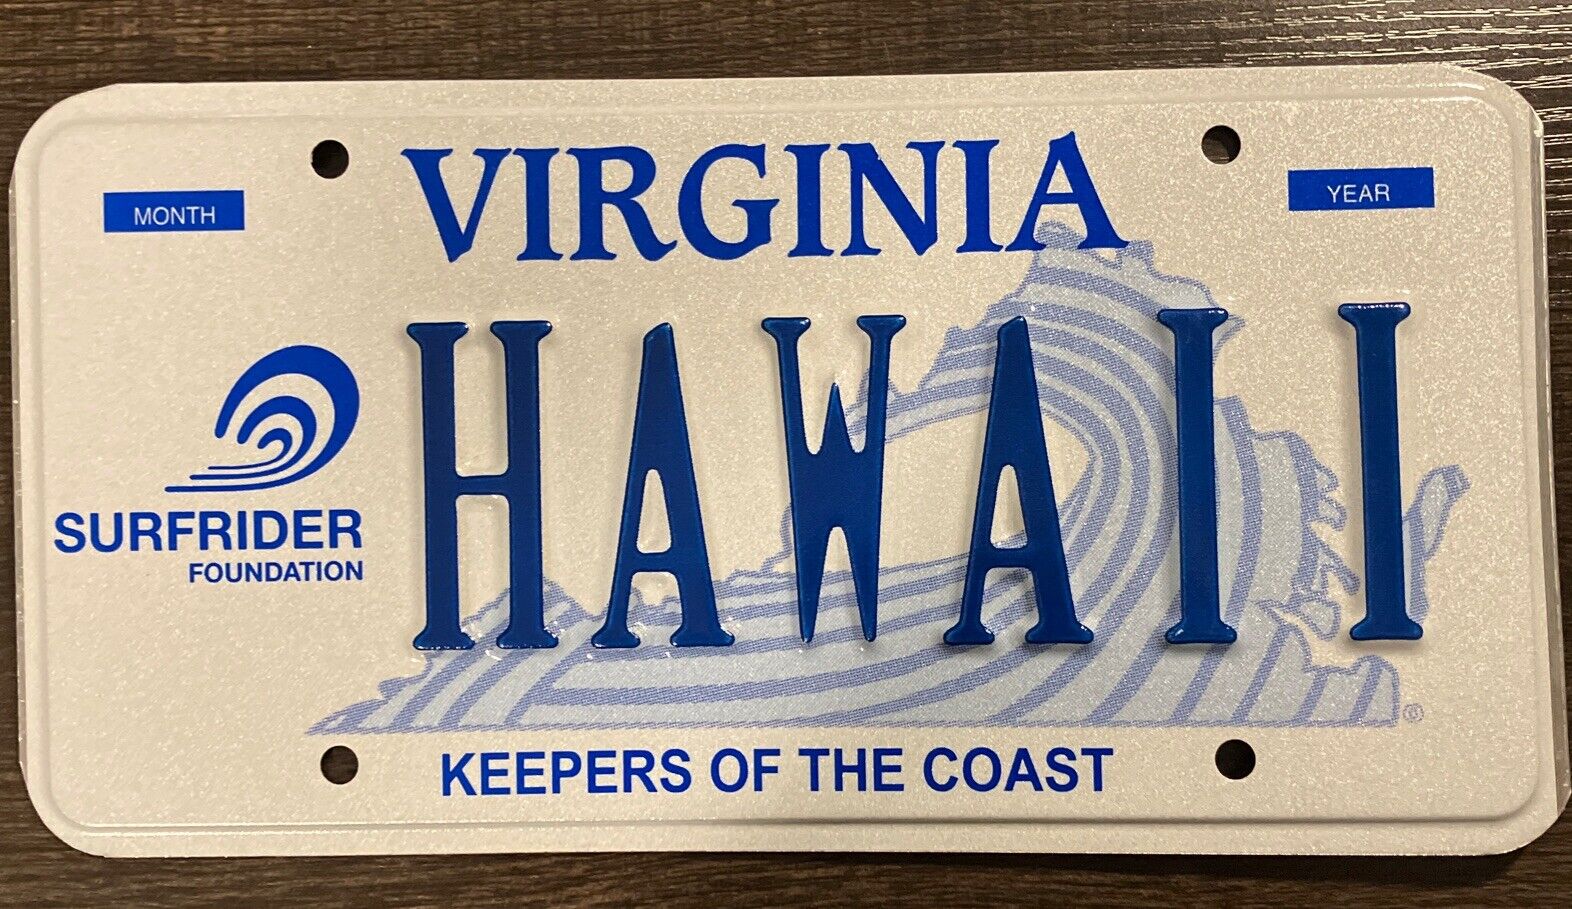 Virginia Personalized Vanity License Plate Tag HAWAII Surf rider Keeper of Coast